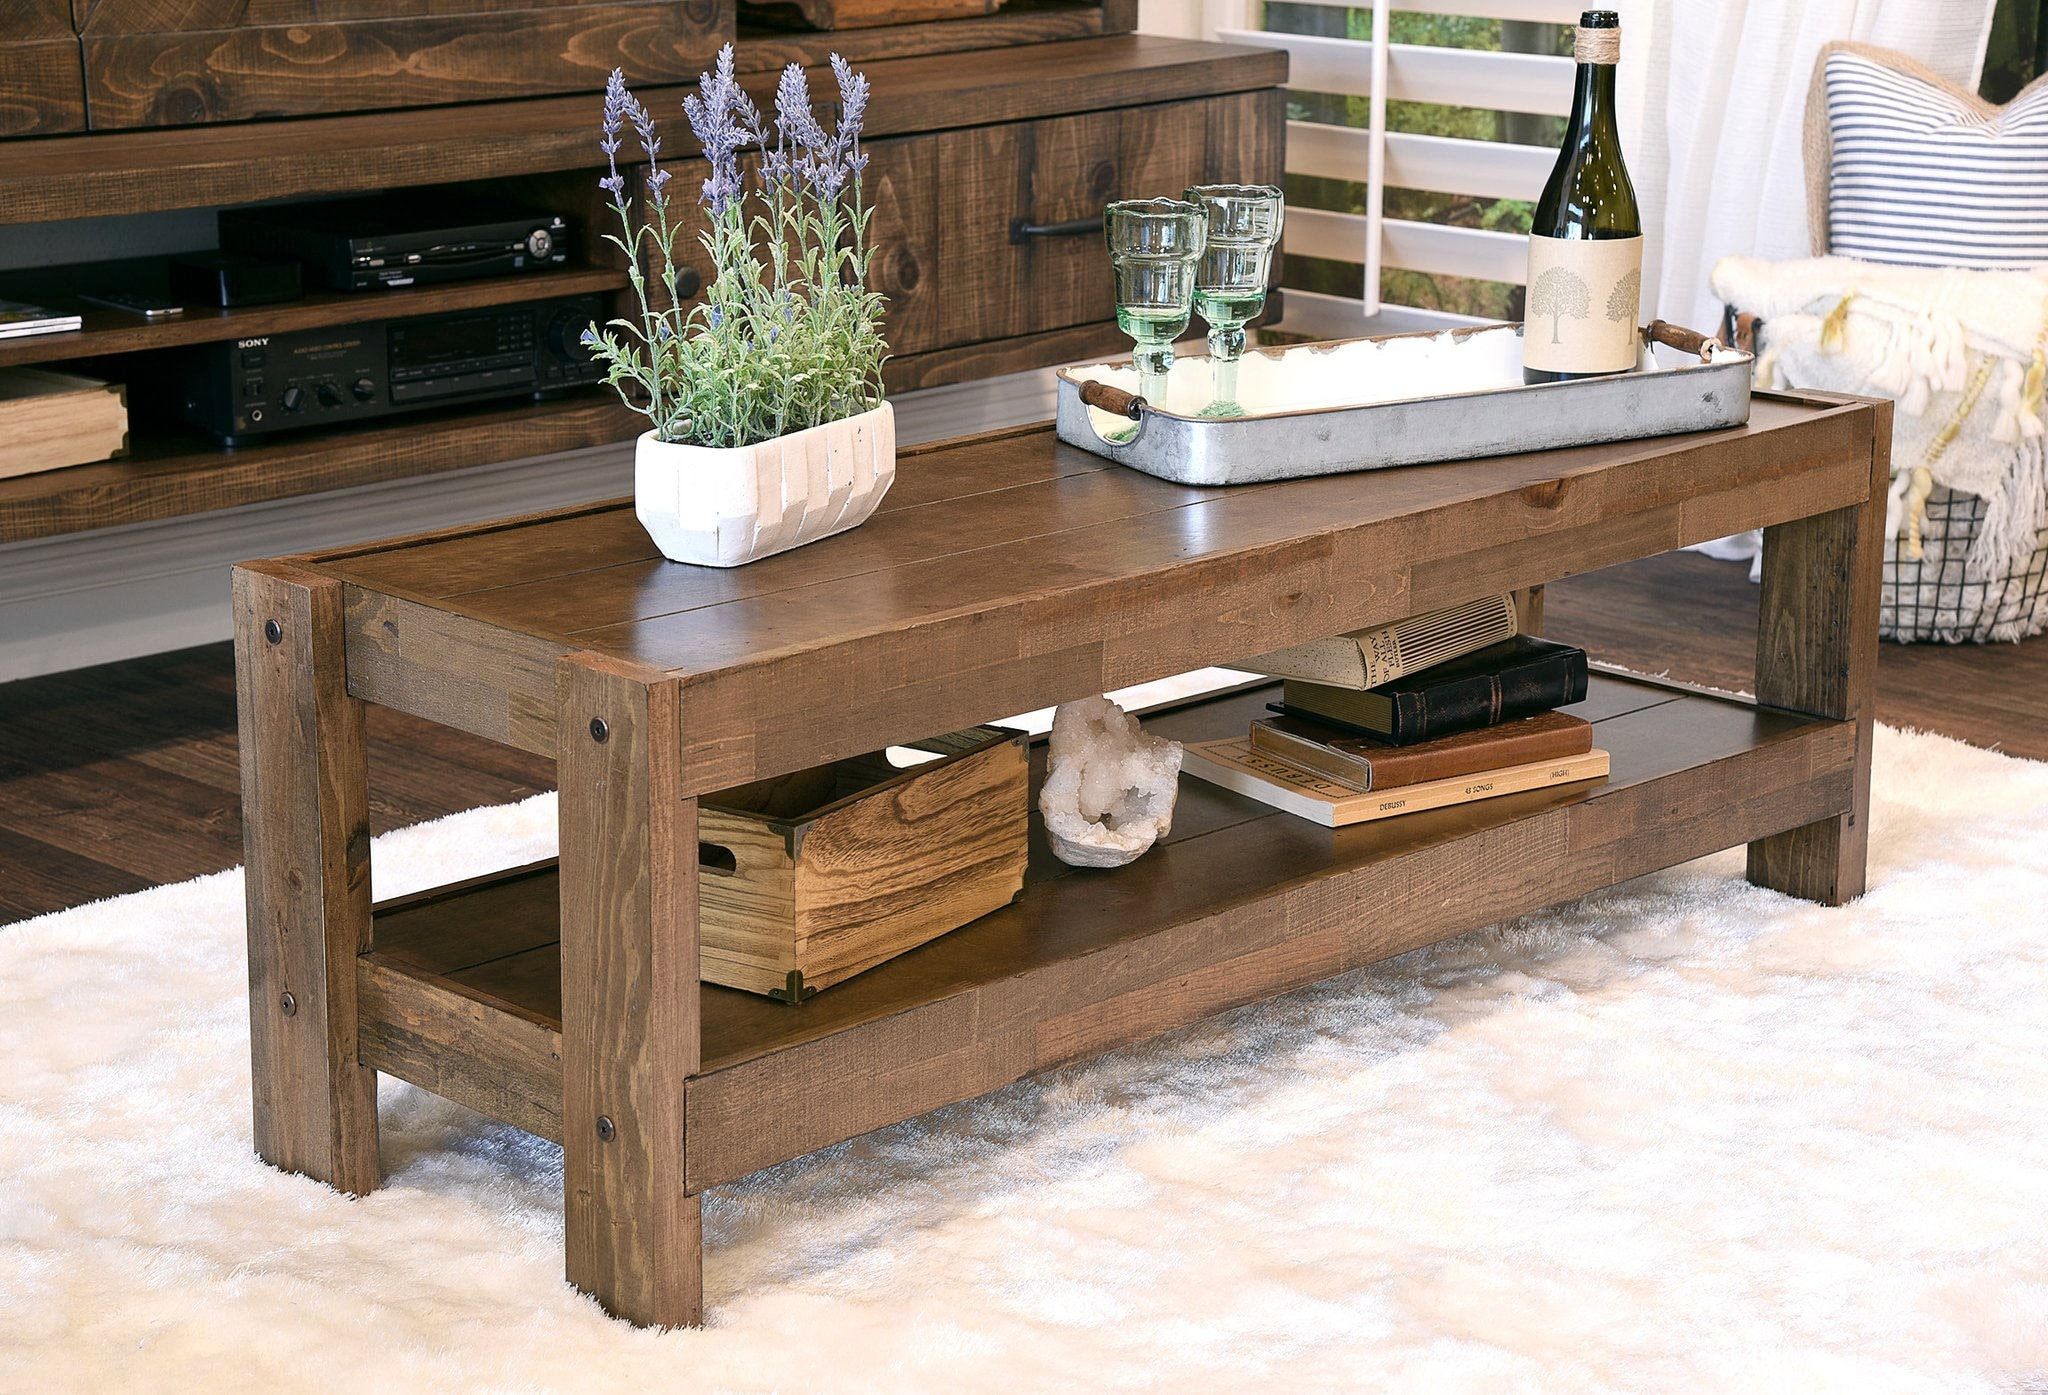 Reclaimed Wood Coffee Table Rustic Barn Wood Style | Etsy Intended For Rustic Wood Coffee Tables (View 5 of 15)